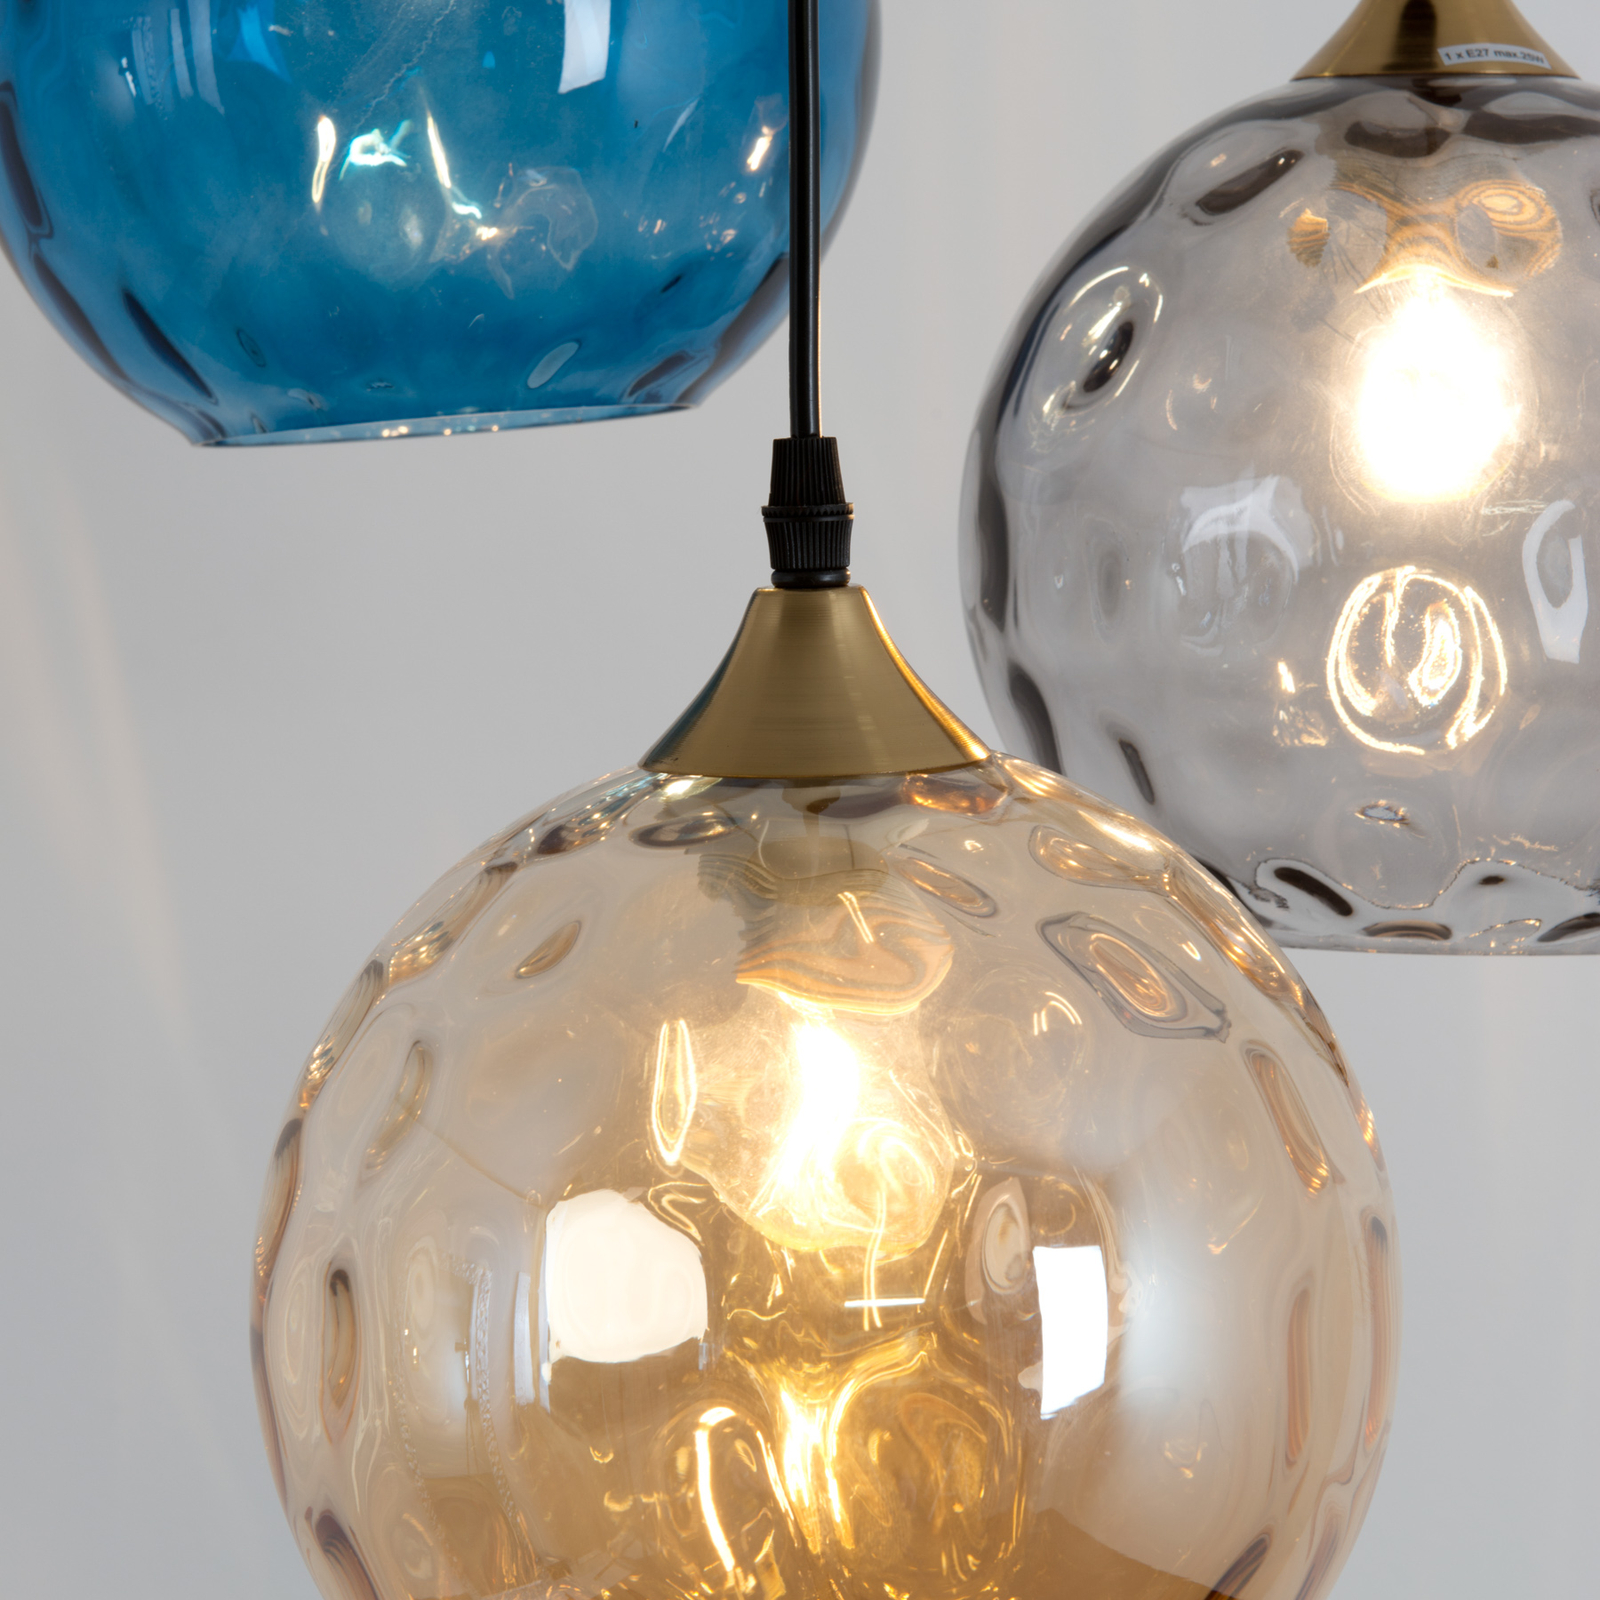 Hanglamp La Spezia 3-lamps glas amber/blauw/rook